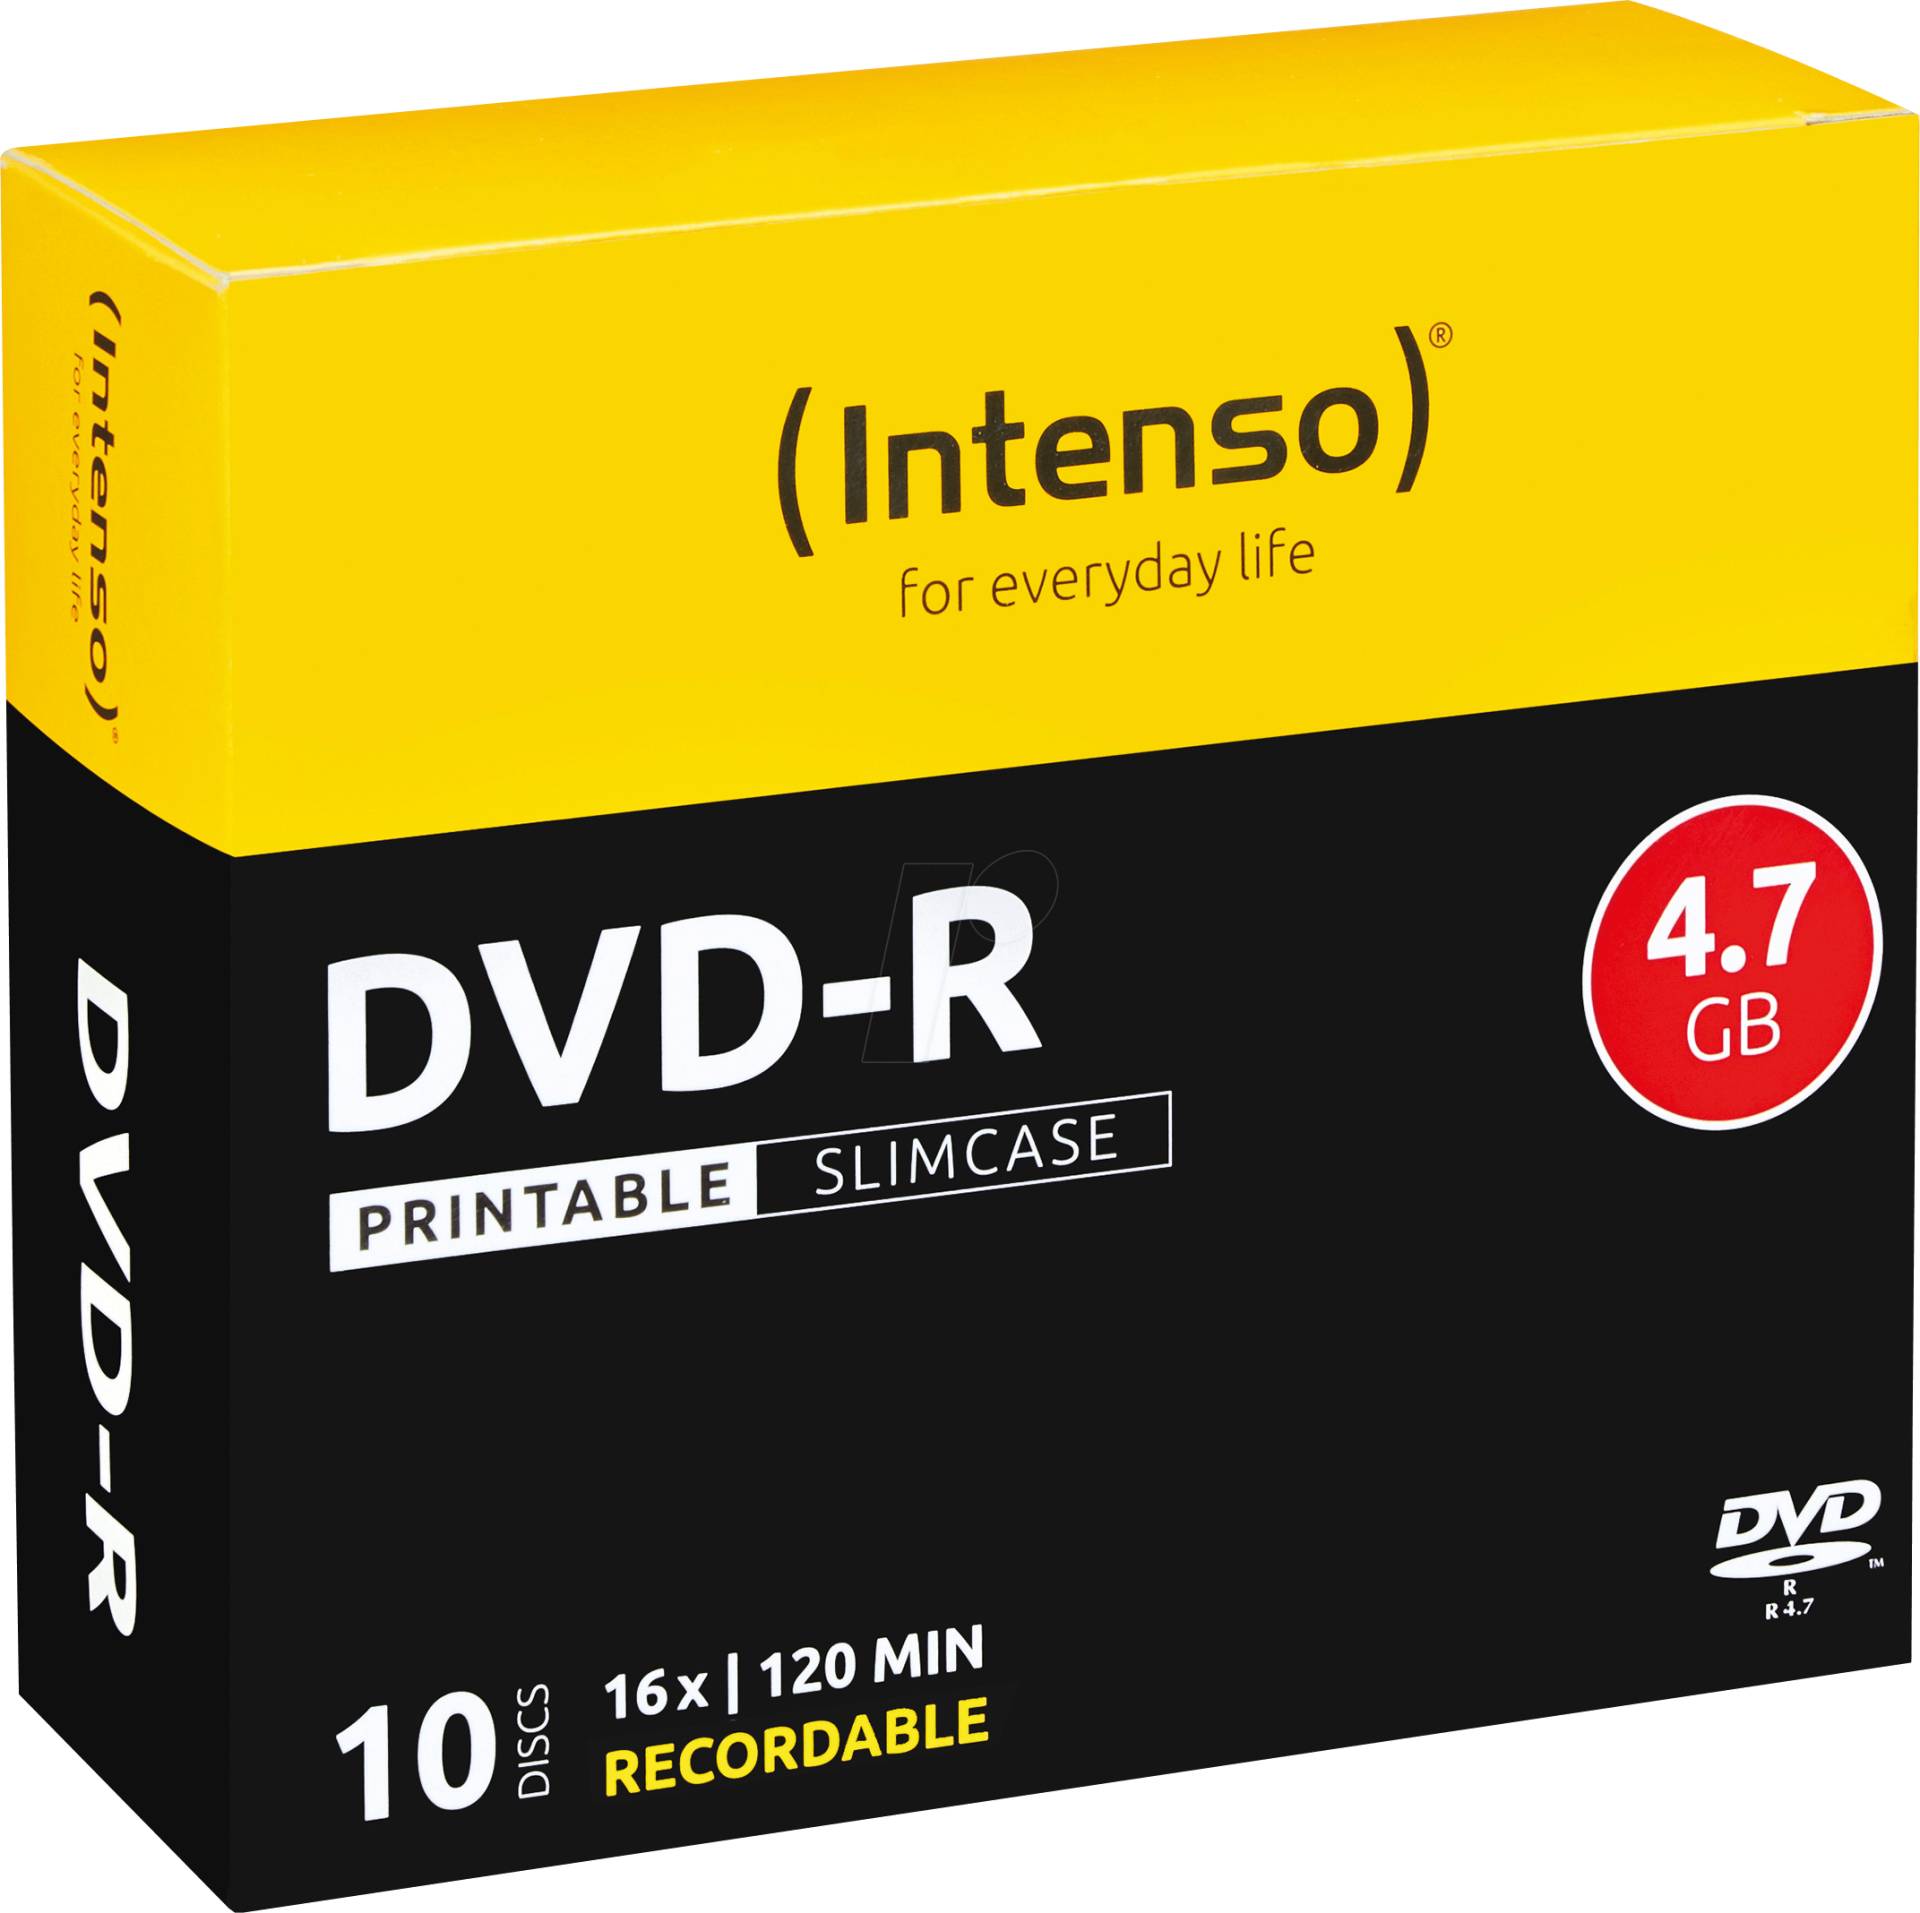 DVD-R4,7 INT10P - Intenso DVD-R 4,7GB, SlimCase, printable von Intenso